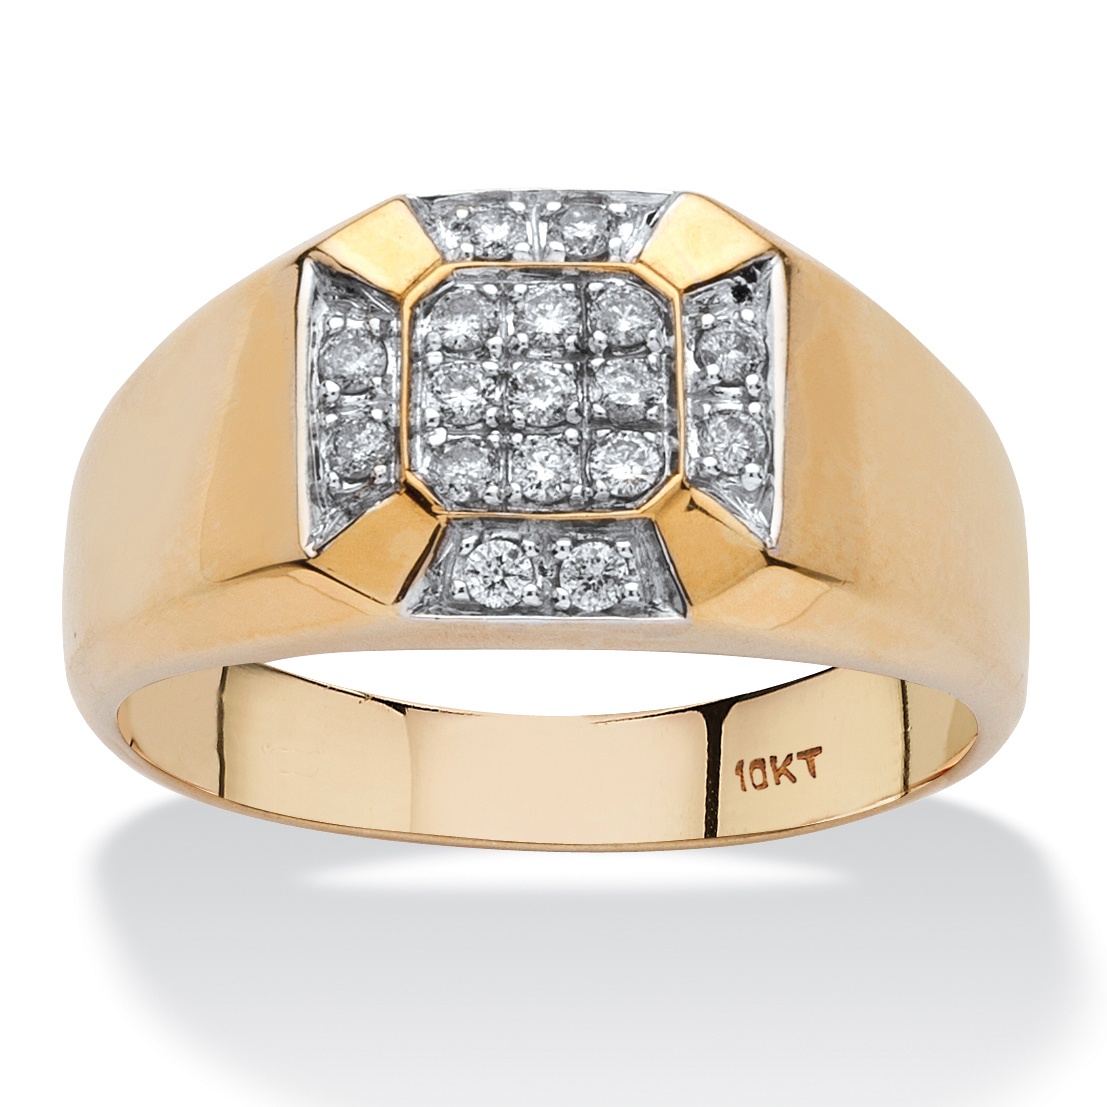 Men's 1/4 TCW Diamond Cross Ring in 10k Yellow Gold at PalmBeach Jewelry